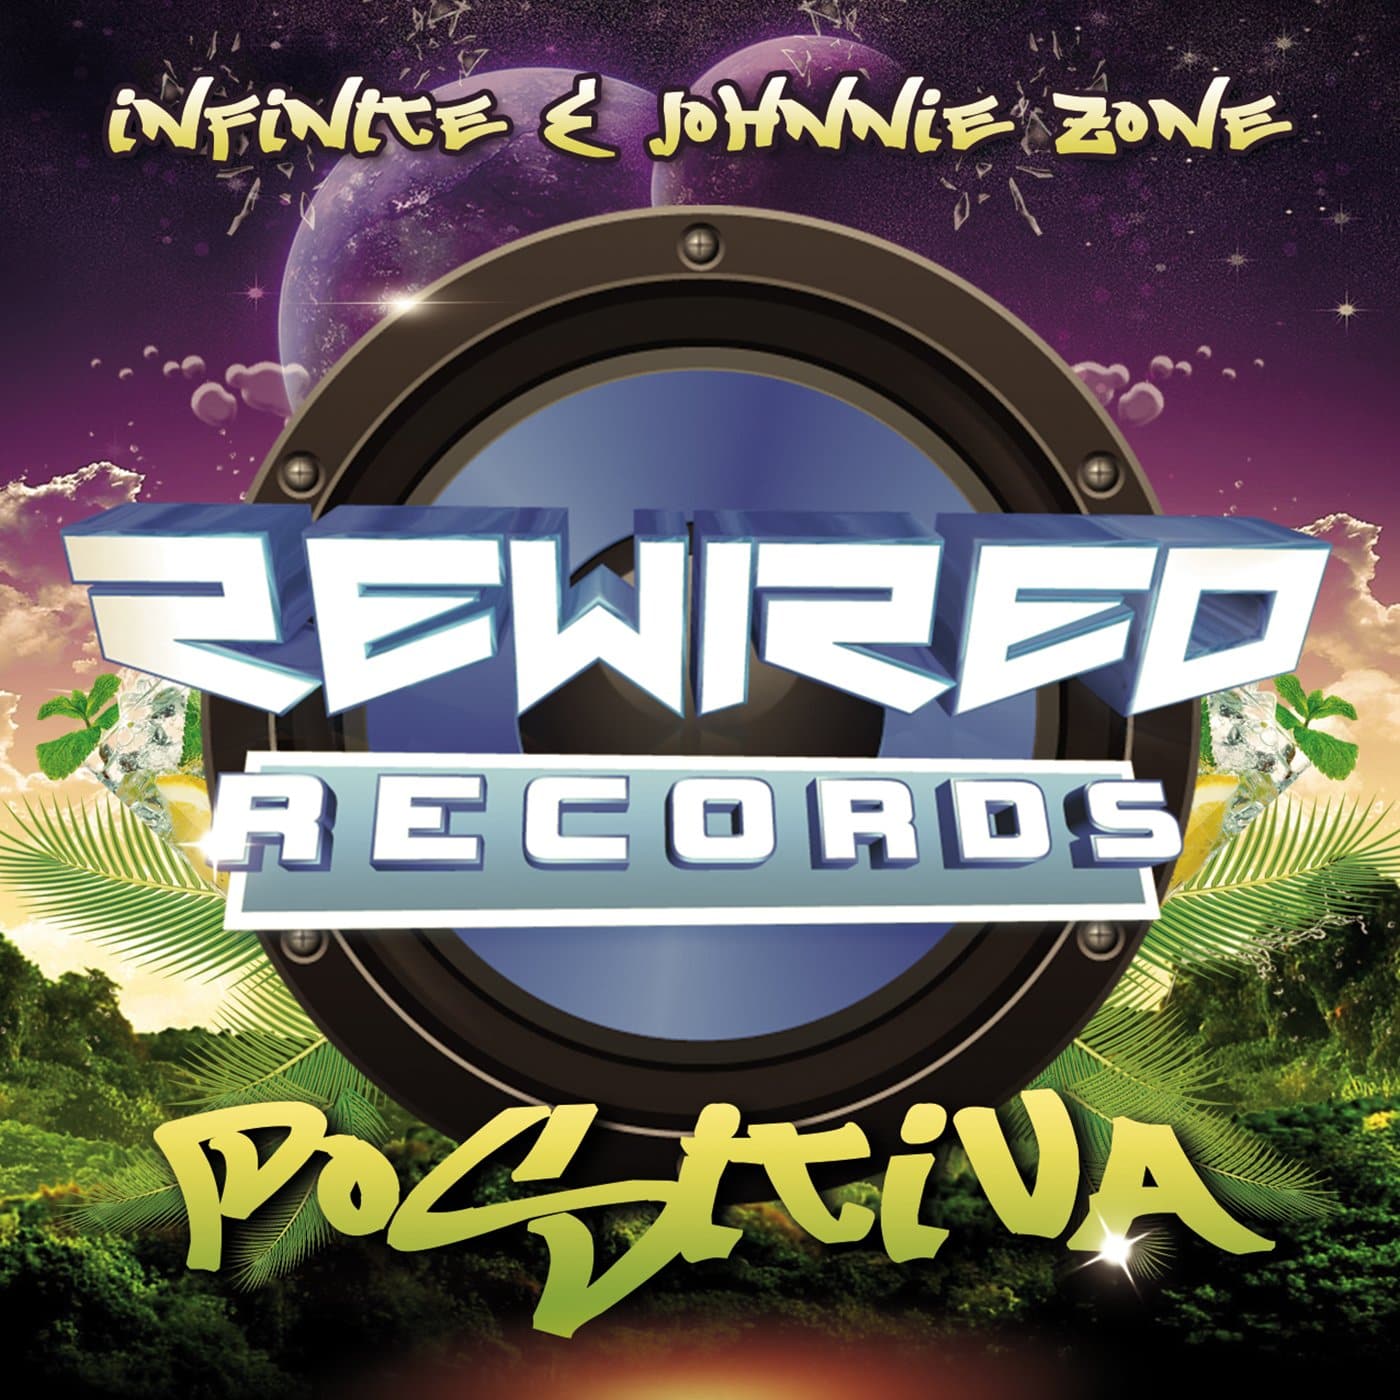 Infinite & Johnnie Zone - Positiva - Rewired Records